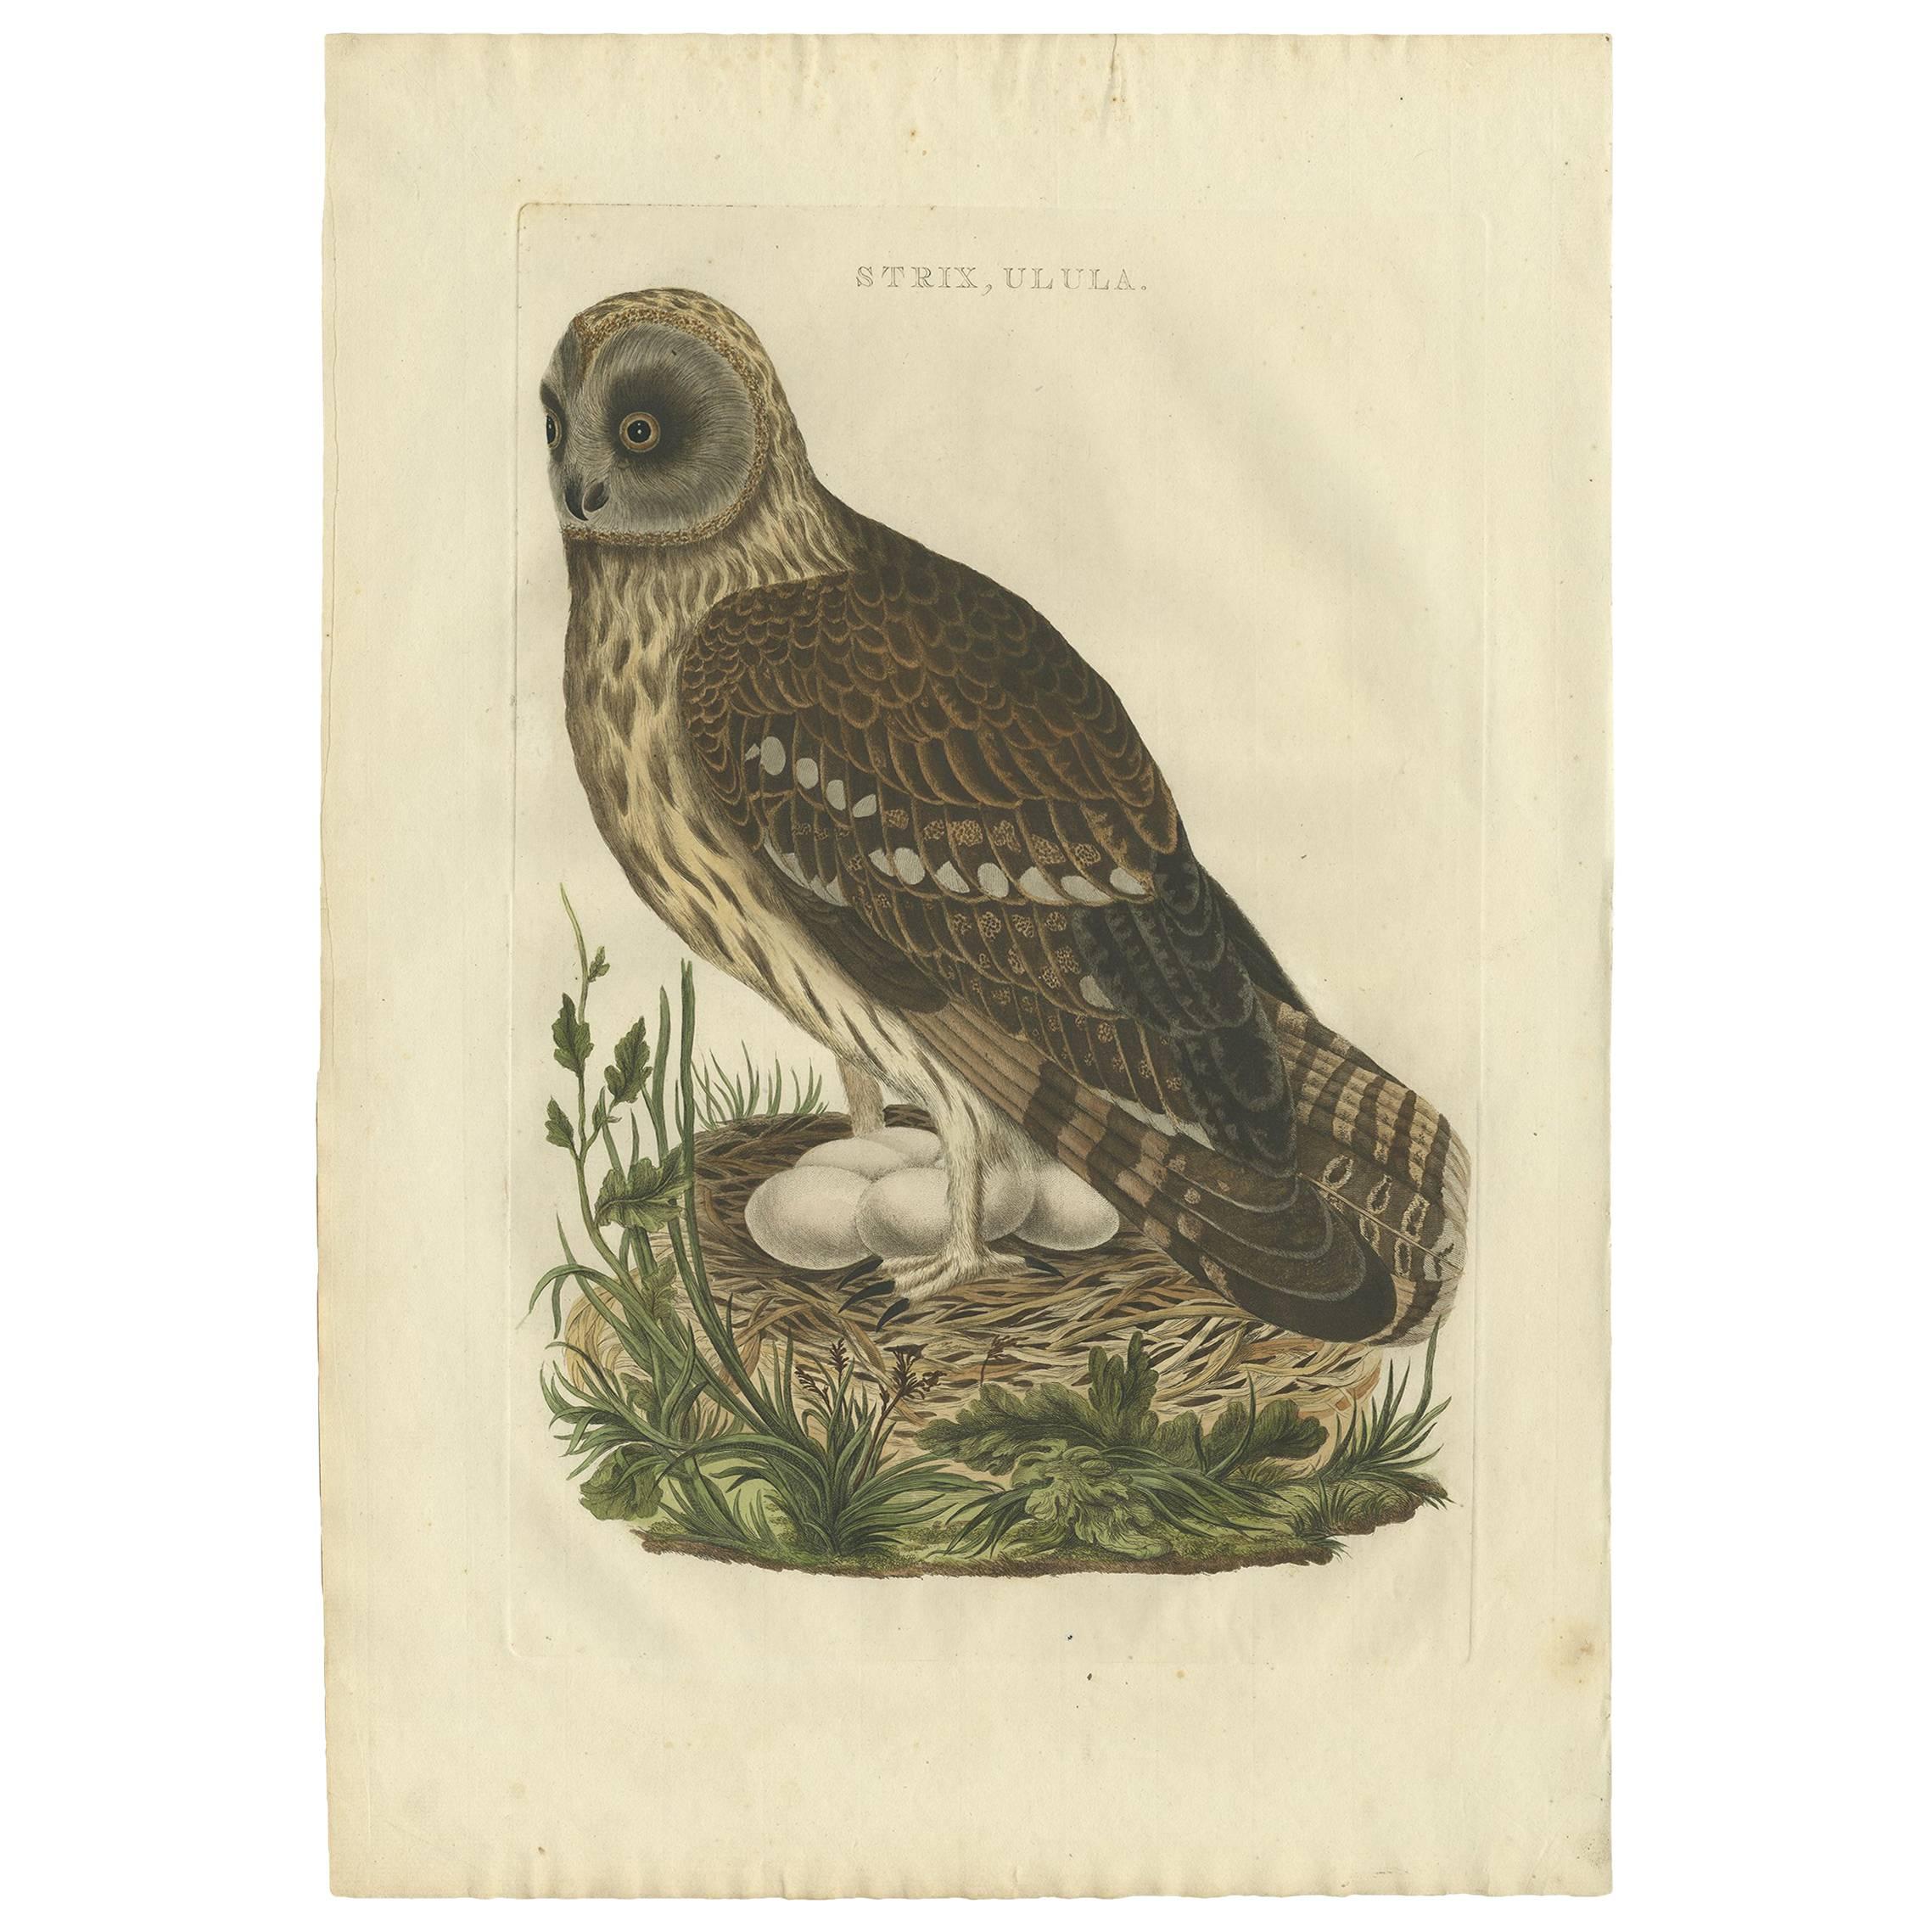 Antique Bird Print of the Strix ‘Owl’ by Sepp & Nozeman, 1770